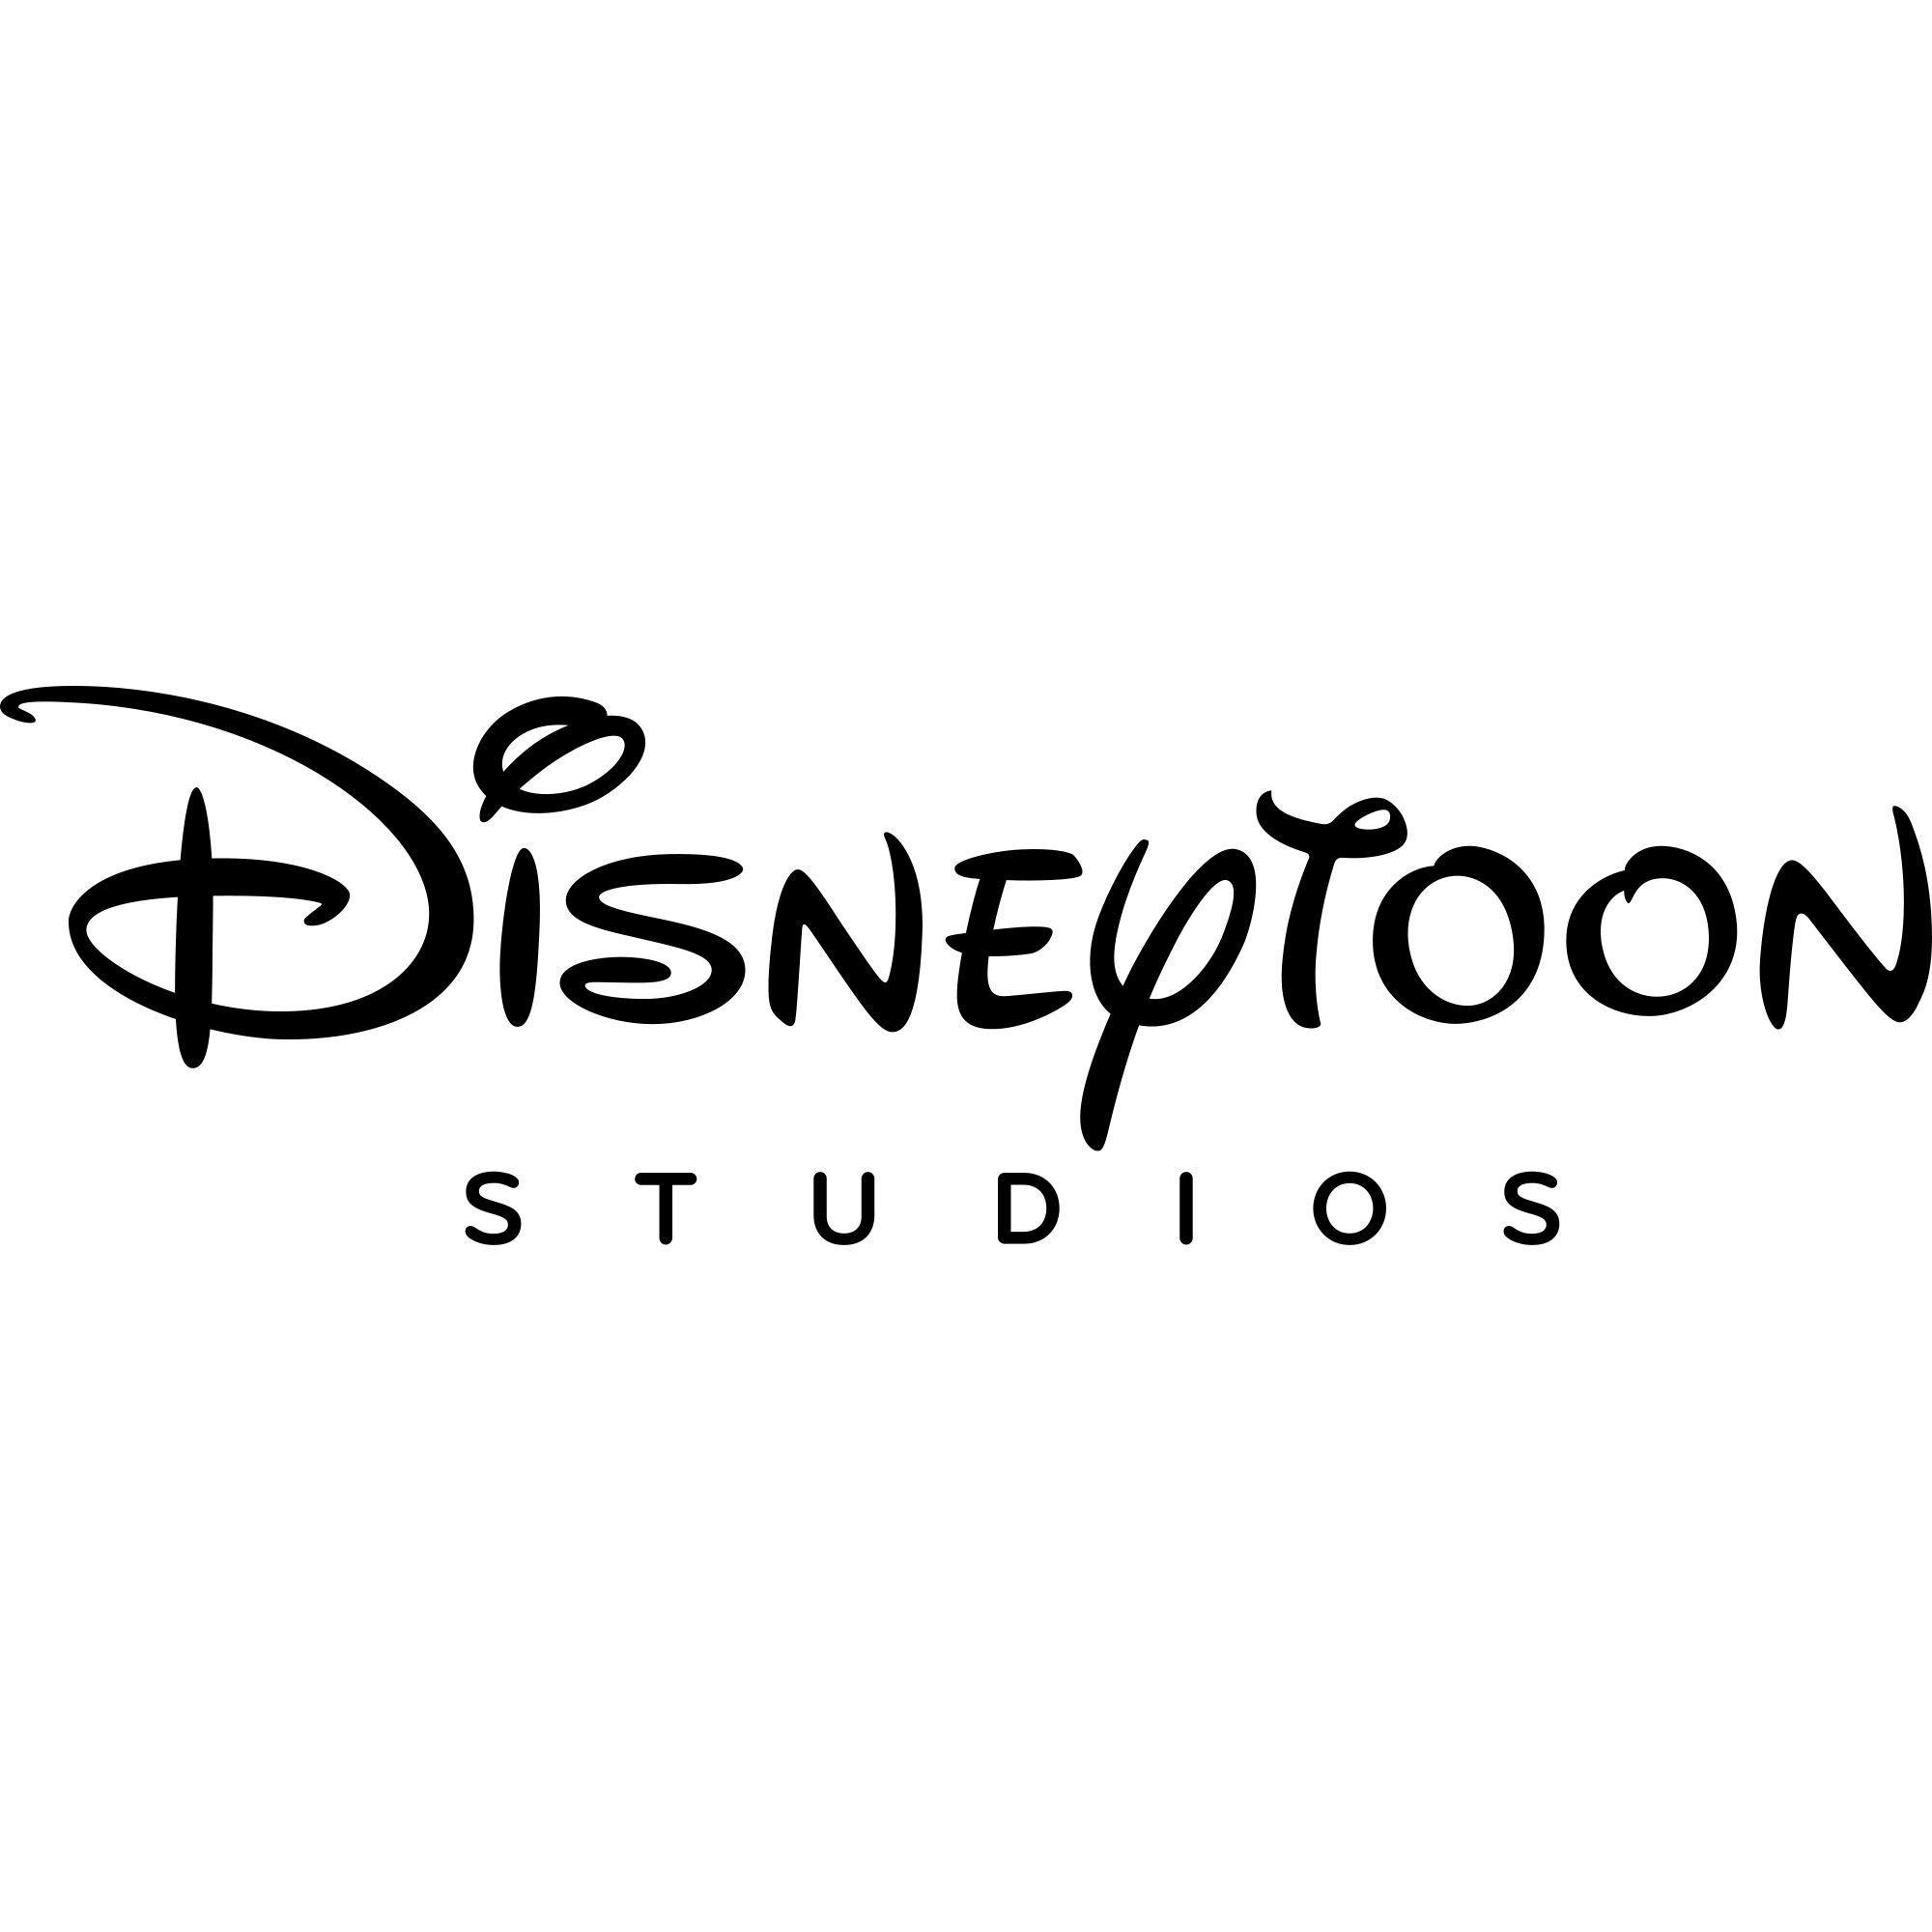 DisneyToon Studios Logo - disneytoon #studios #logos #cartoons #toons #disney #animation ...